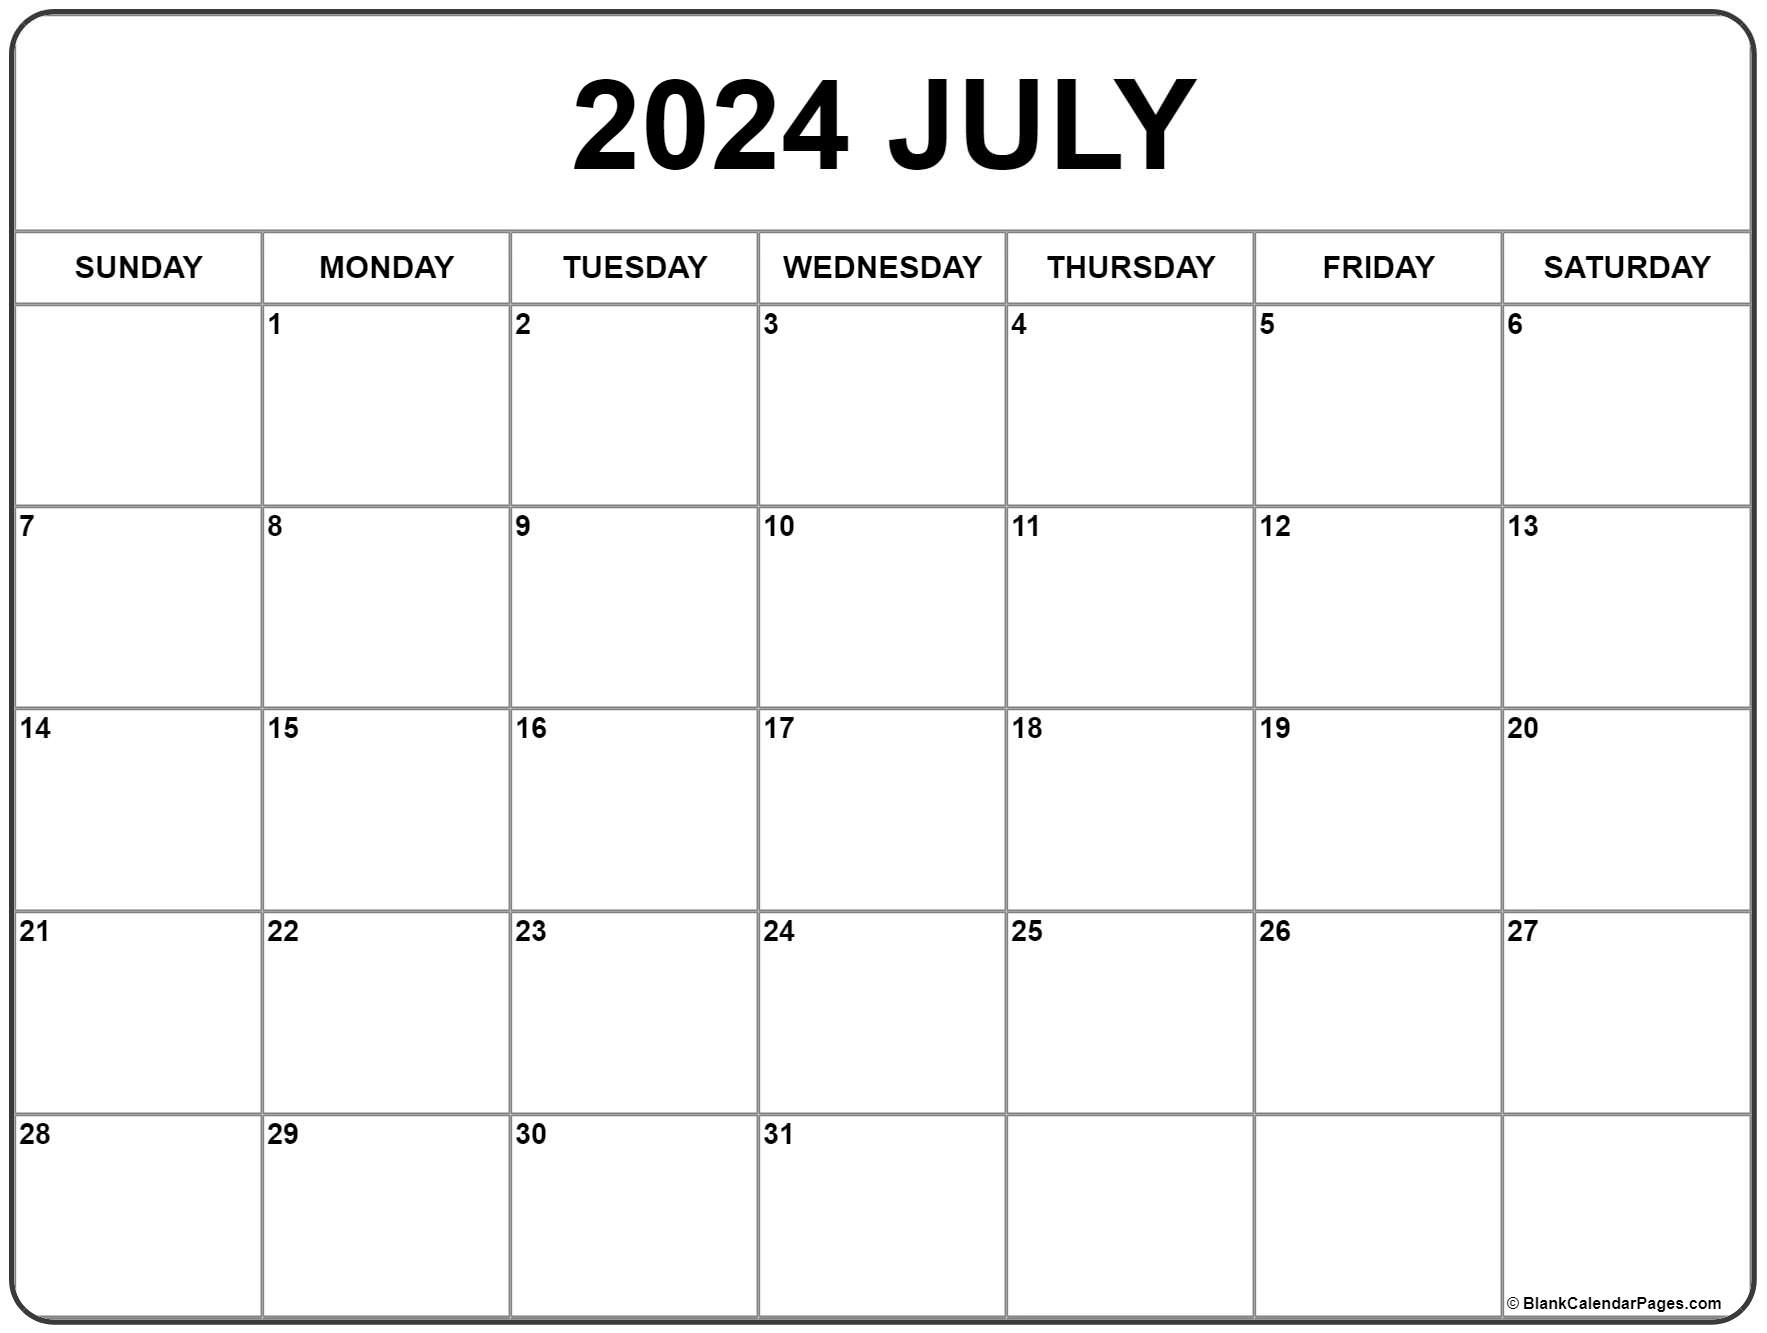 July 2024 Calendar | Free Printable Calendar within Calendar 2024 July Template